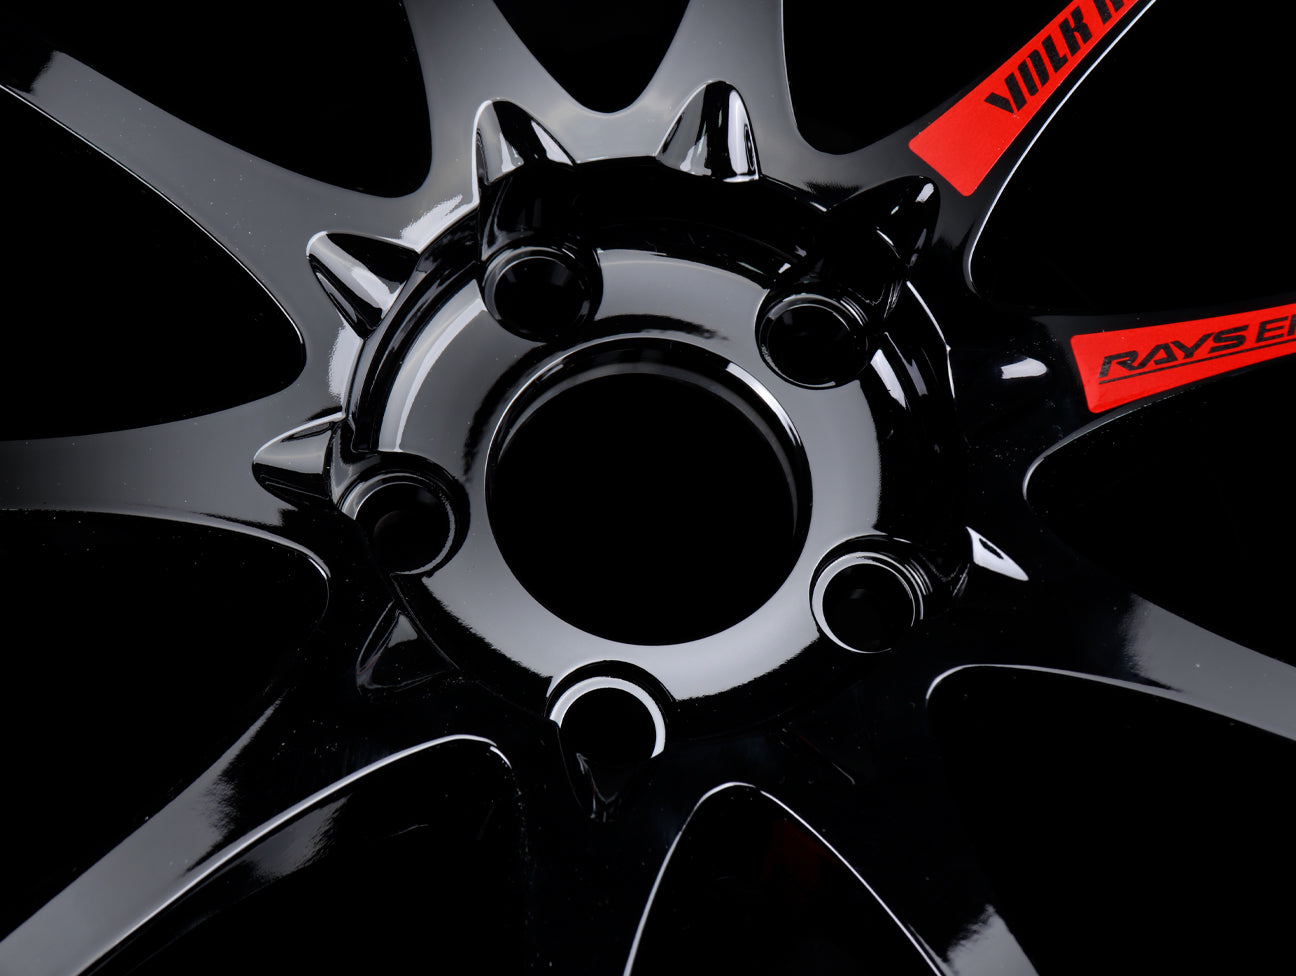 Volk Racing CE28SL Wheels - Gloss Black 18x9.5 / 5x120 / +35